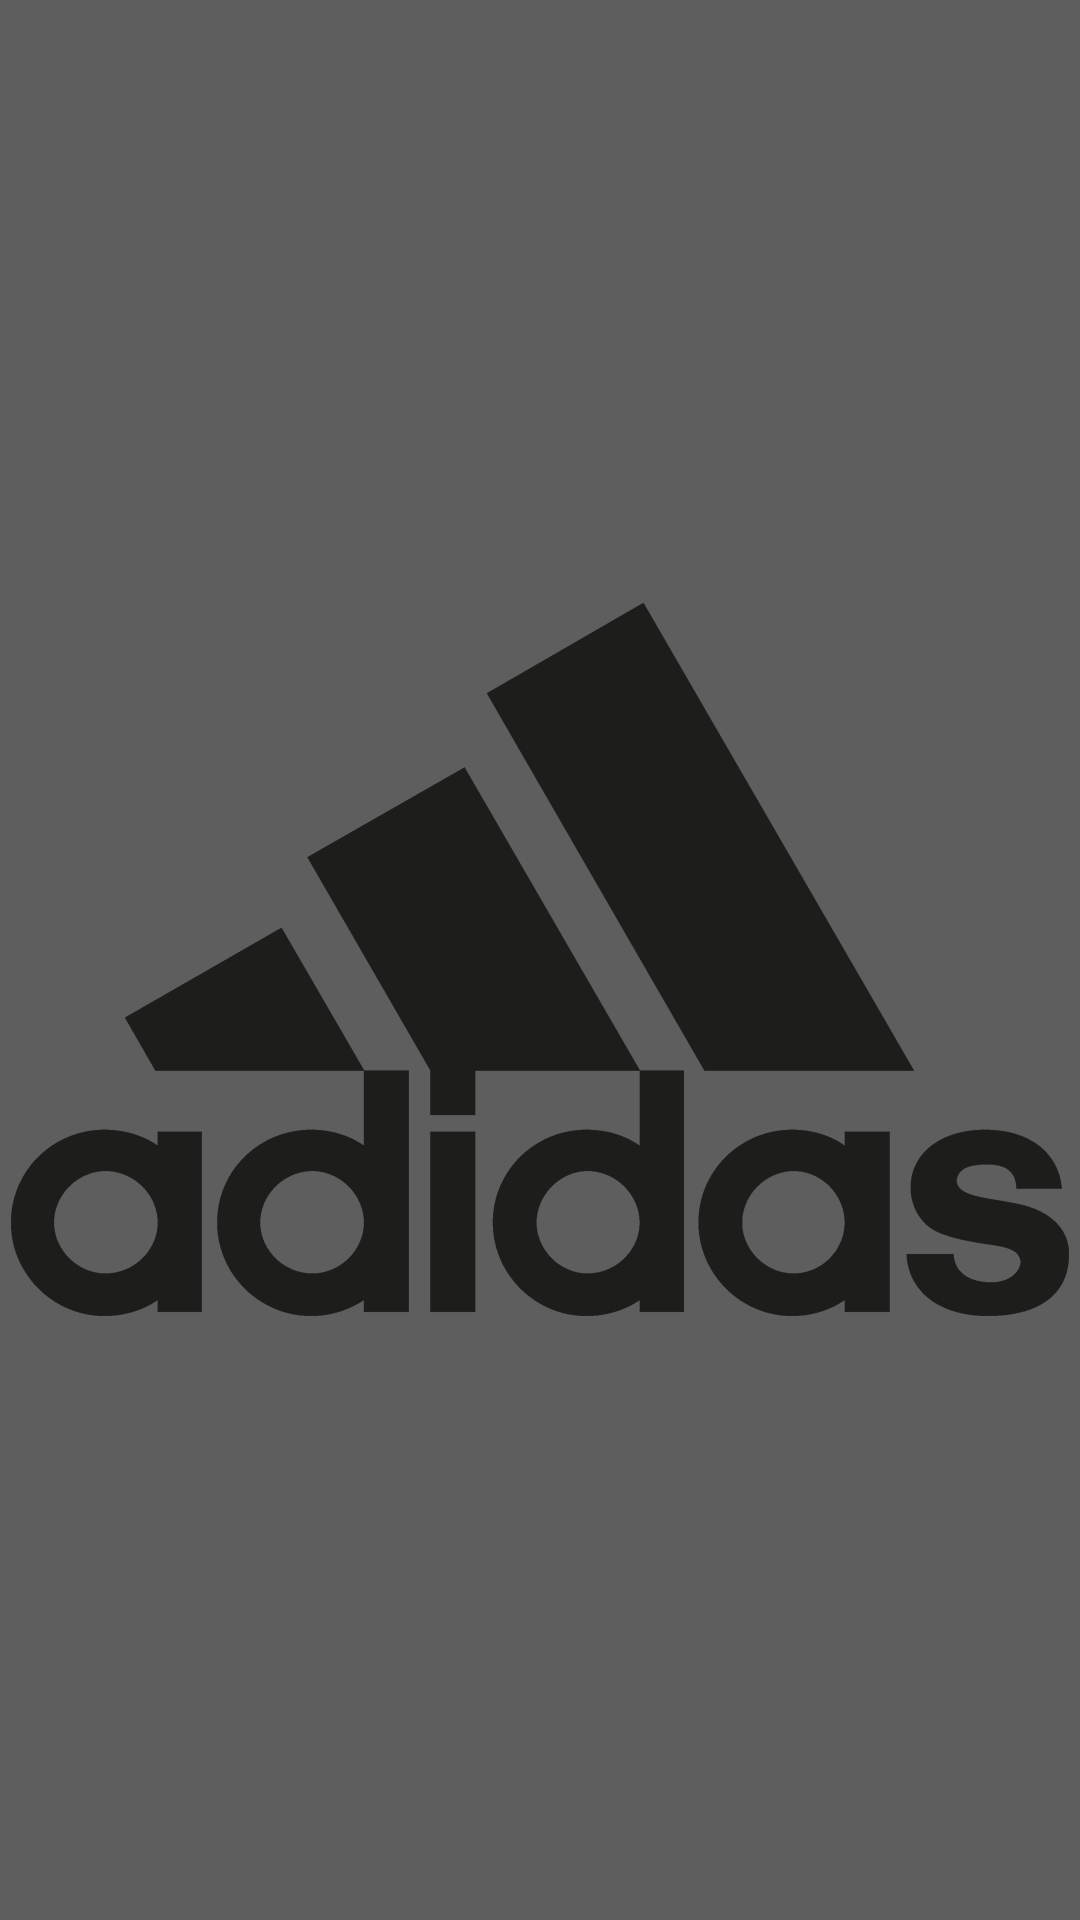 Free Adidas Logo Wallpapers Wallpaper Cave